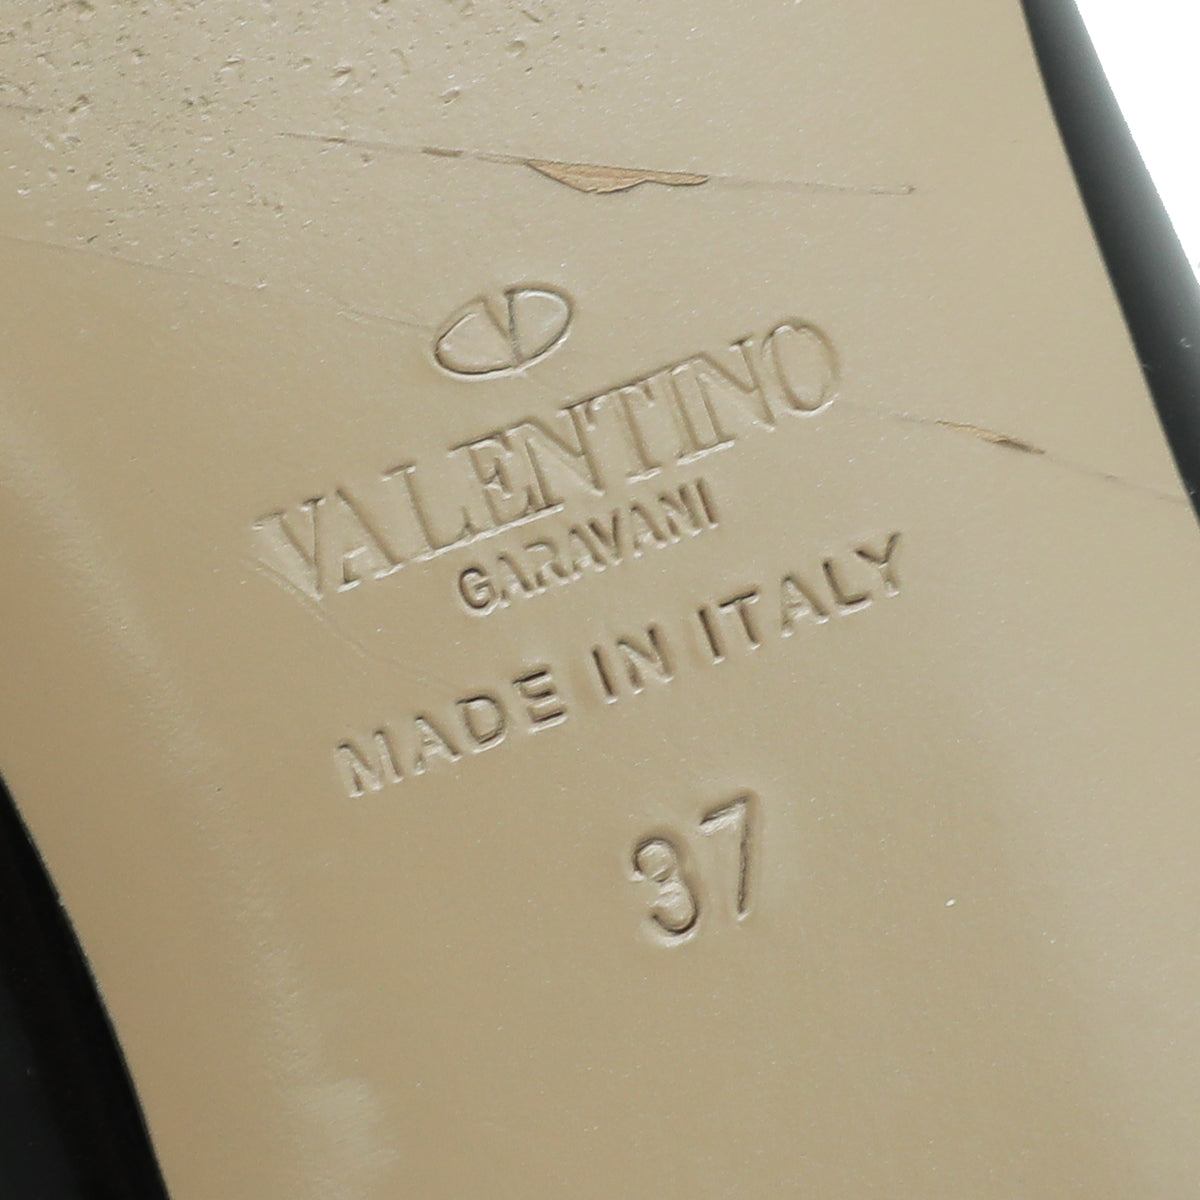 Valentino Black Pointed Bow Flats 37